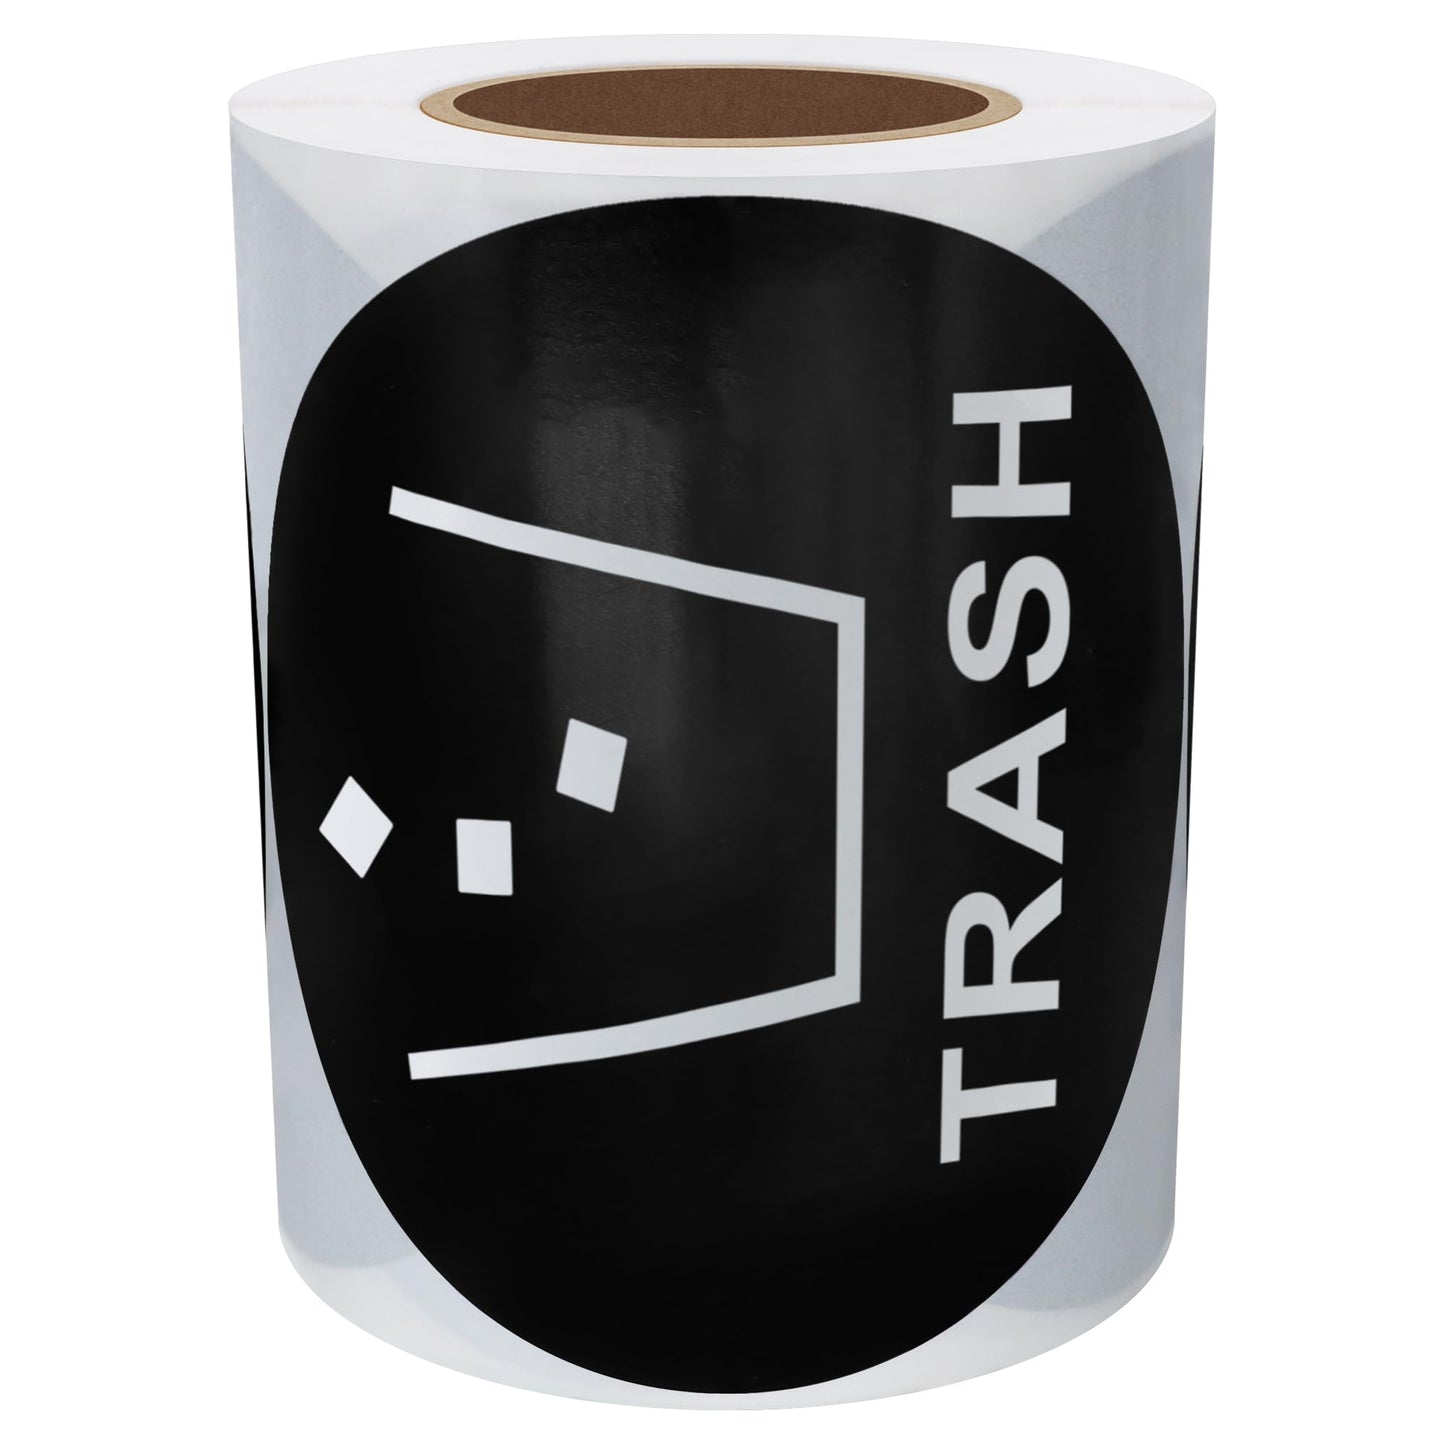 Hybsk Recycle Trash Bin Logo Sticker - 4 inch Round - Organize & Coordinate Garbage Waste from Recycling